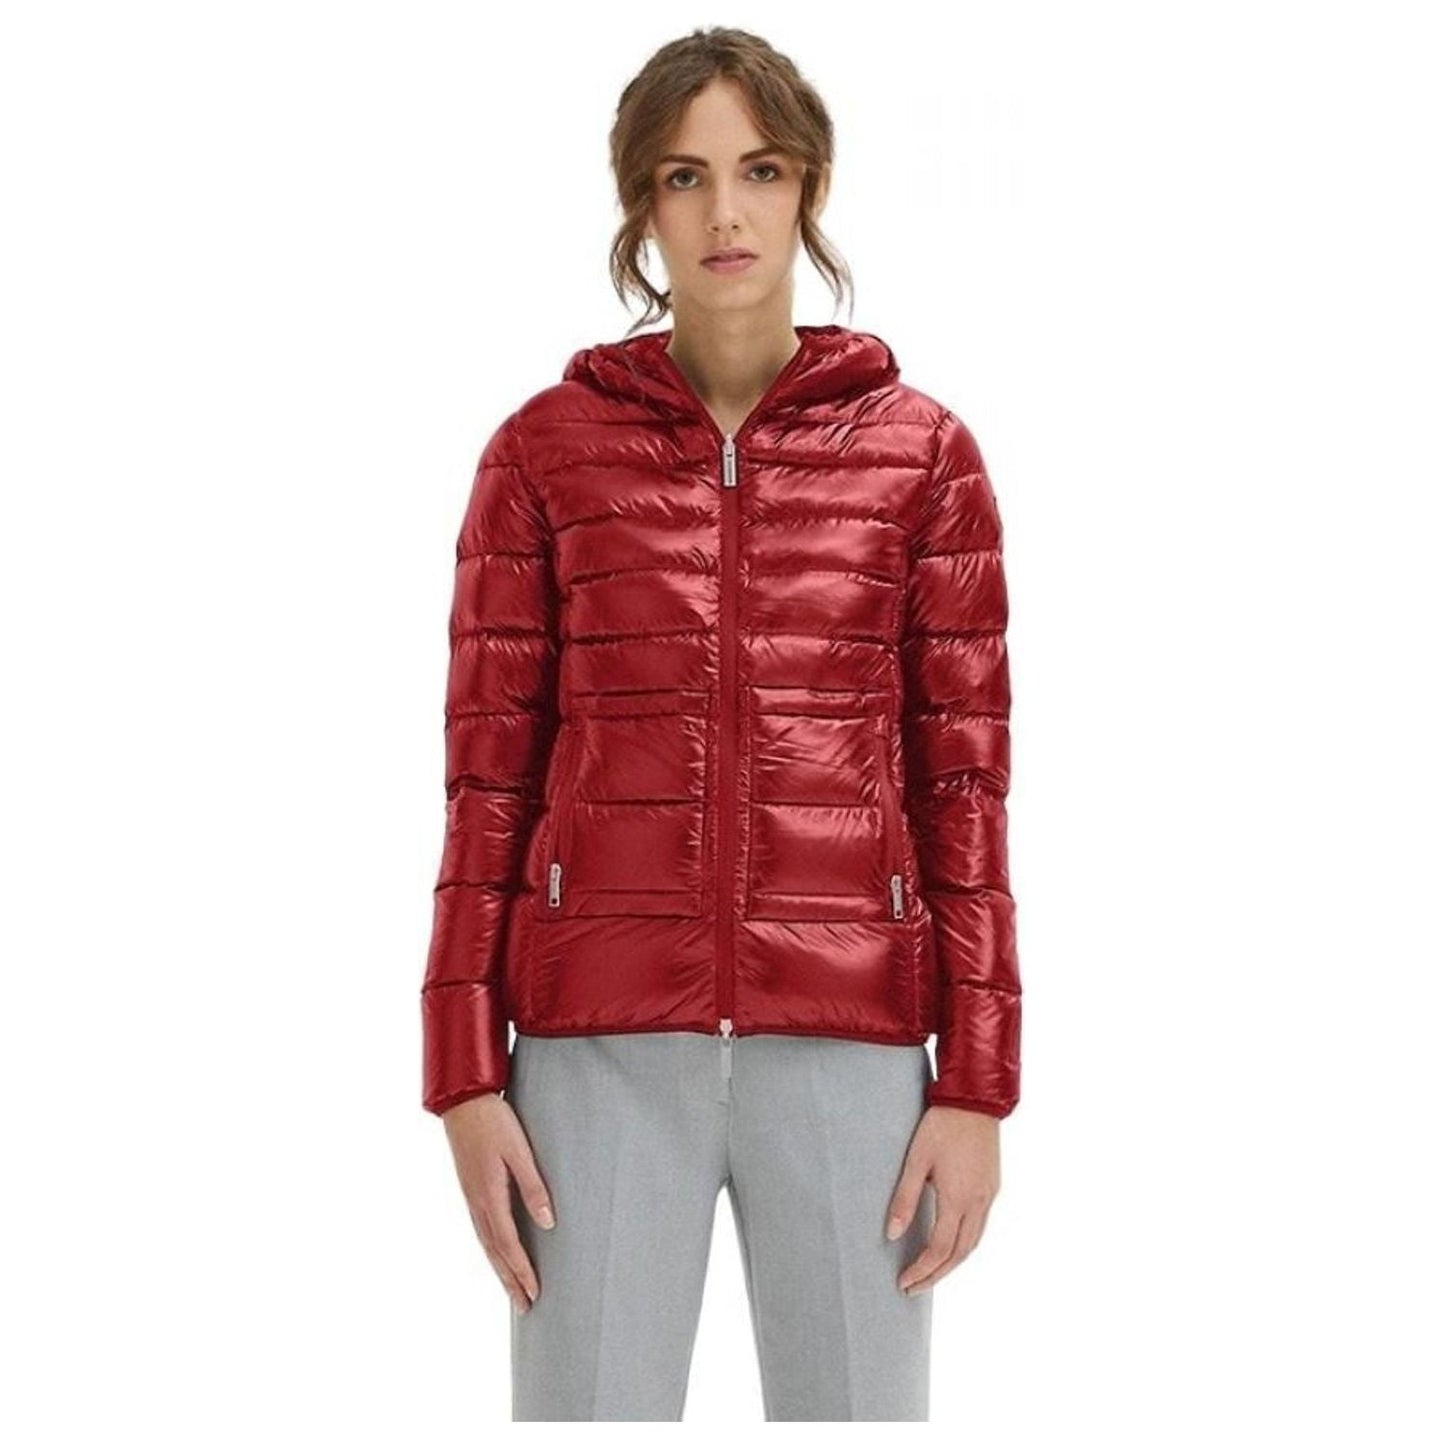 Centogrammi Elegant Ultra Light Hooded Down Jacket red-nylon-jackets-coat-2 product-8591-2073868789-585a1ea9-00d.jpg